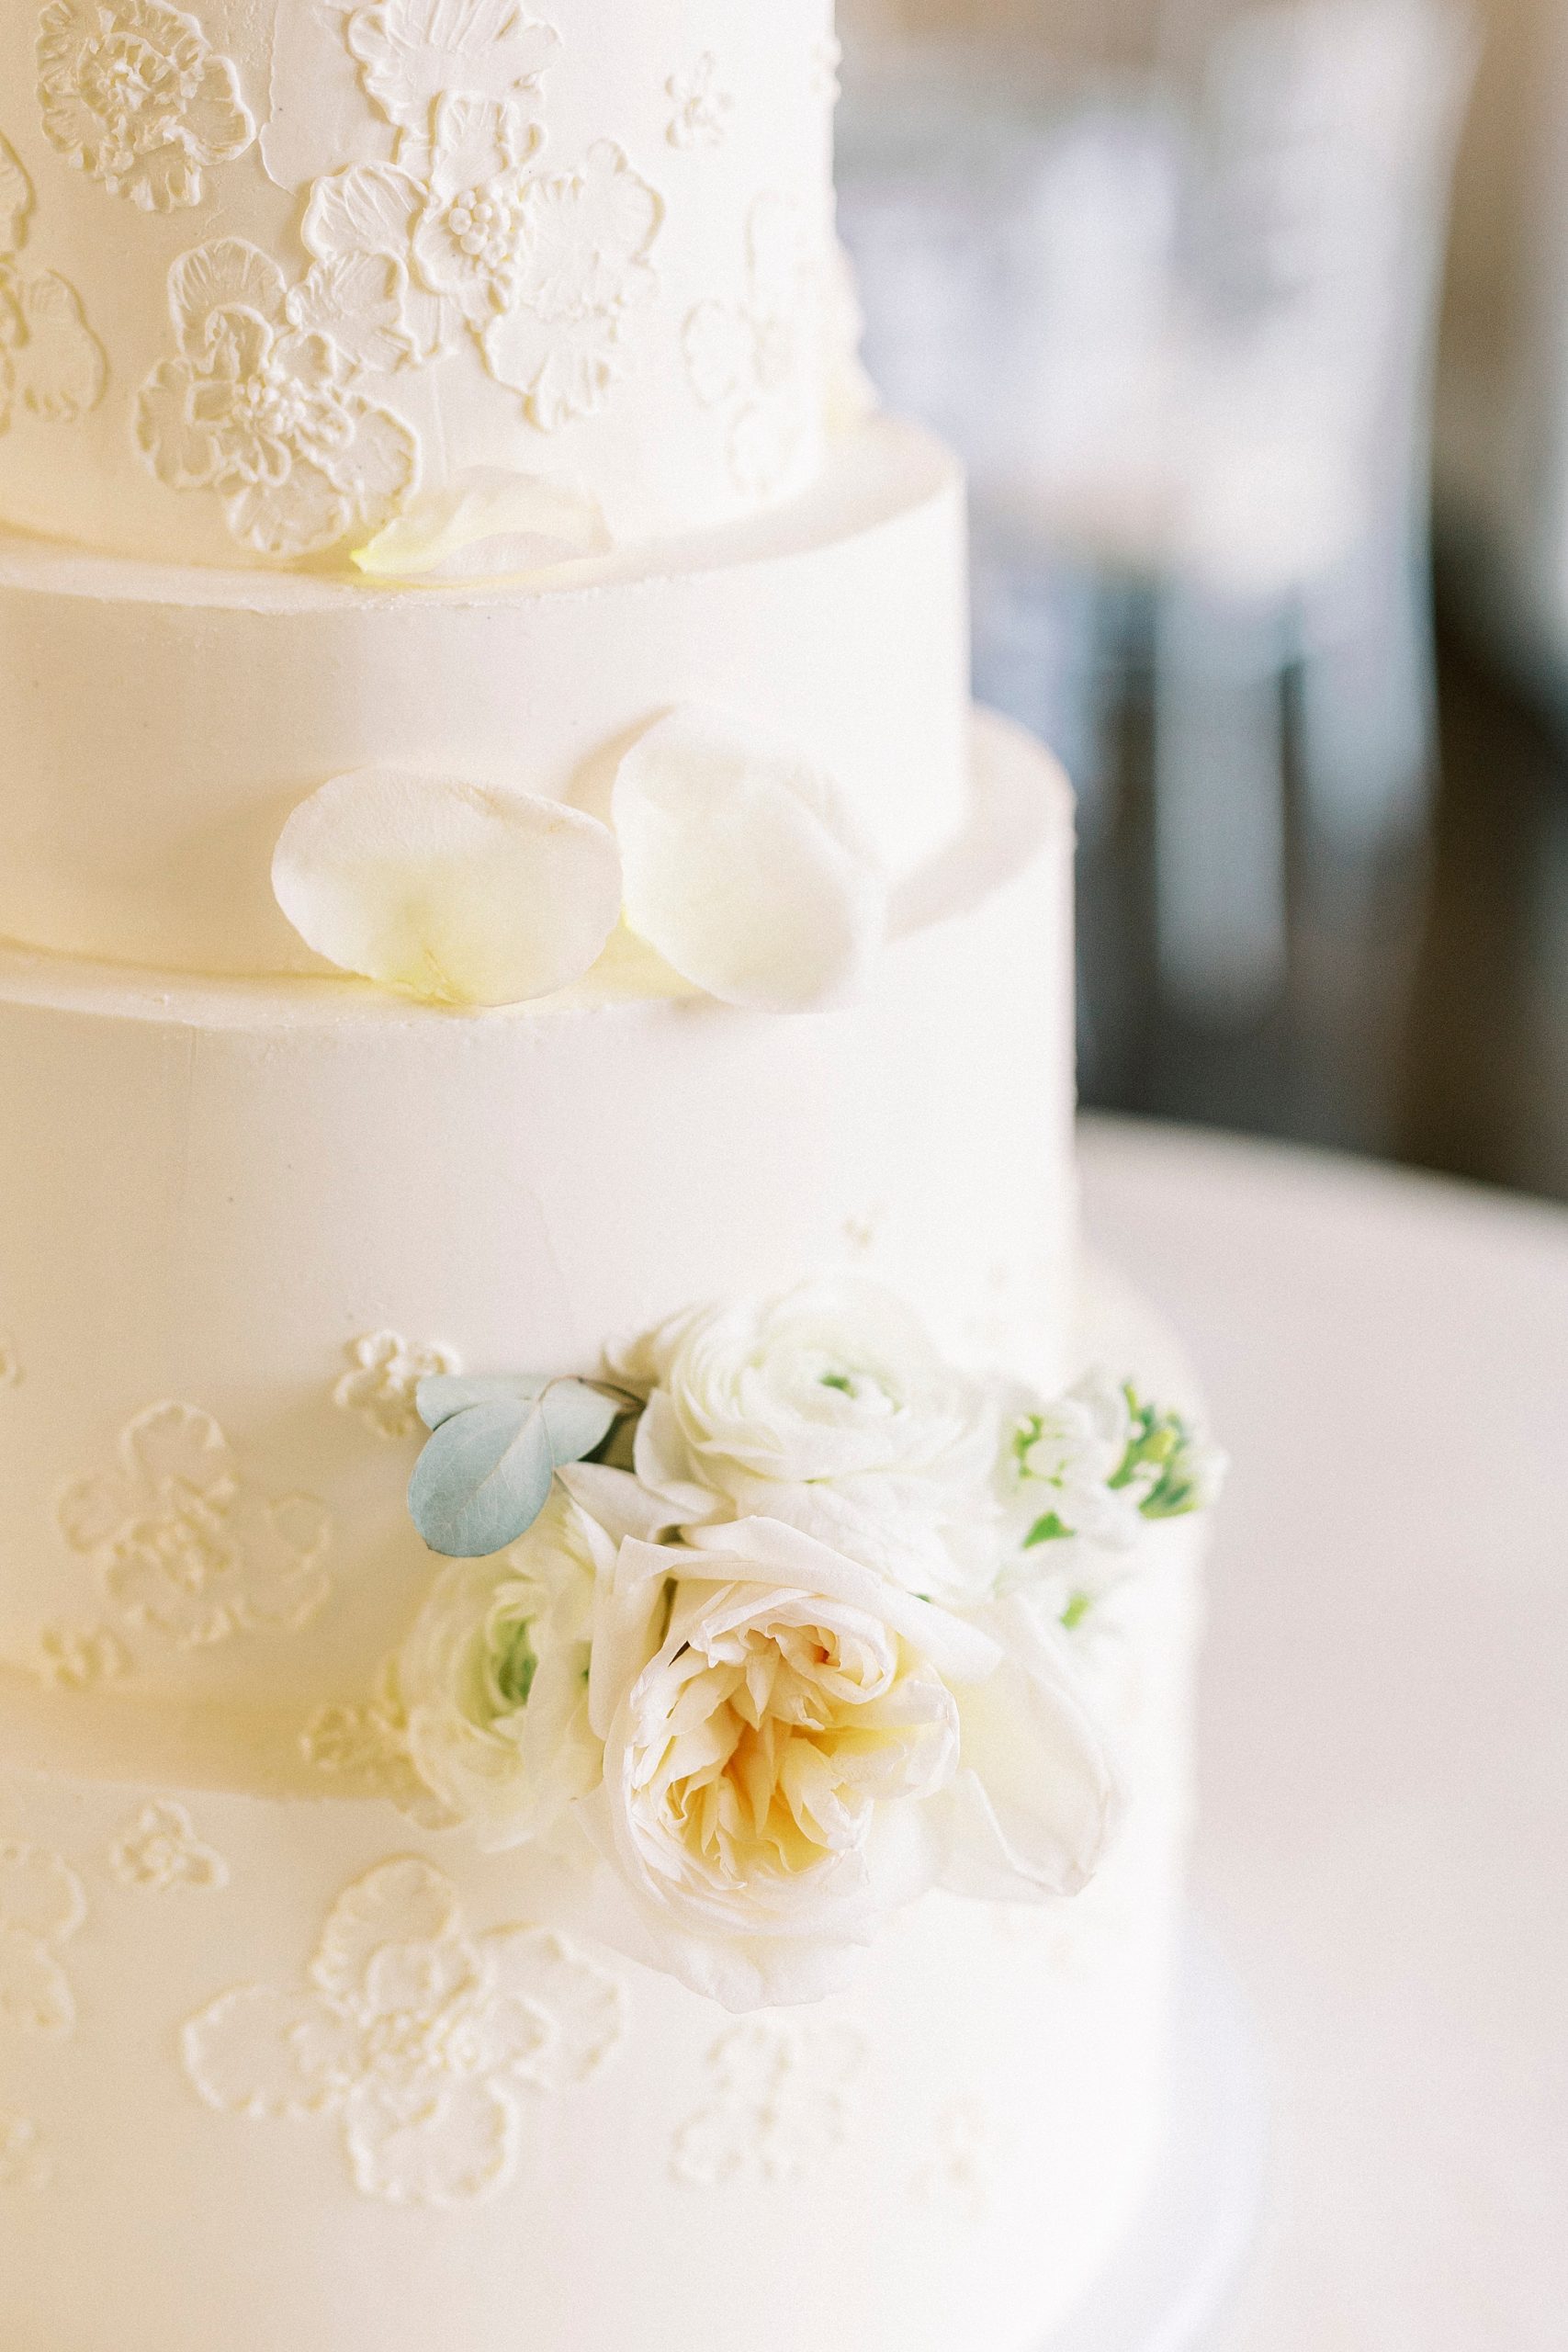 details on wedding cake for tasting event 